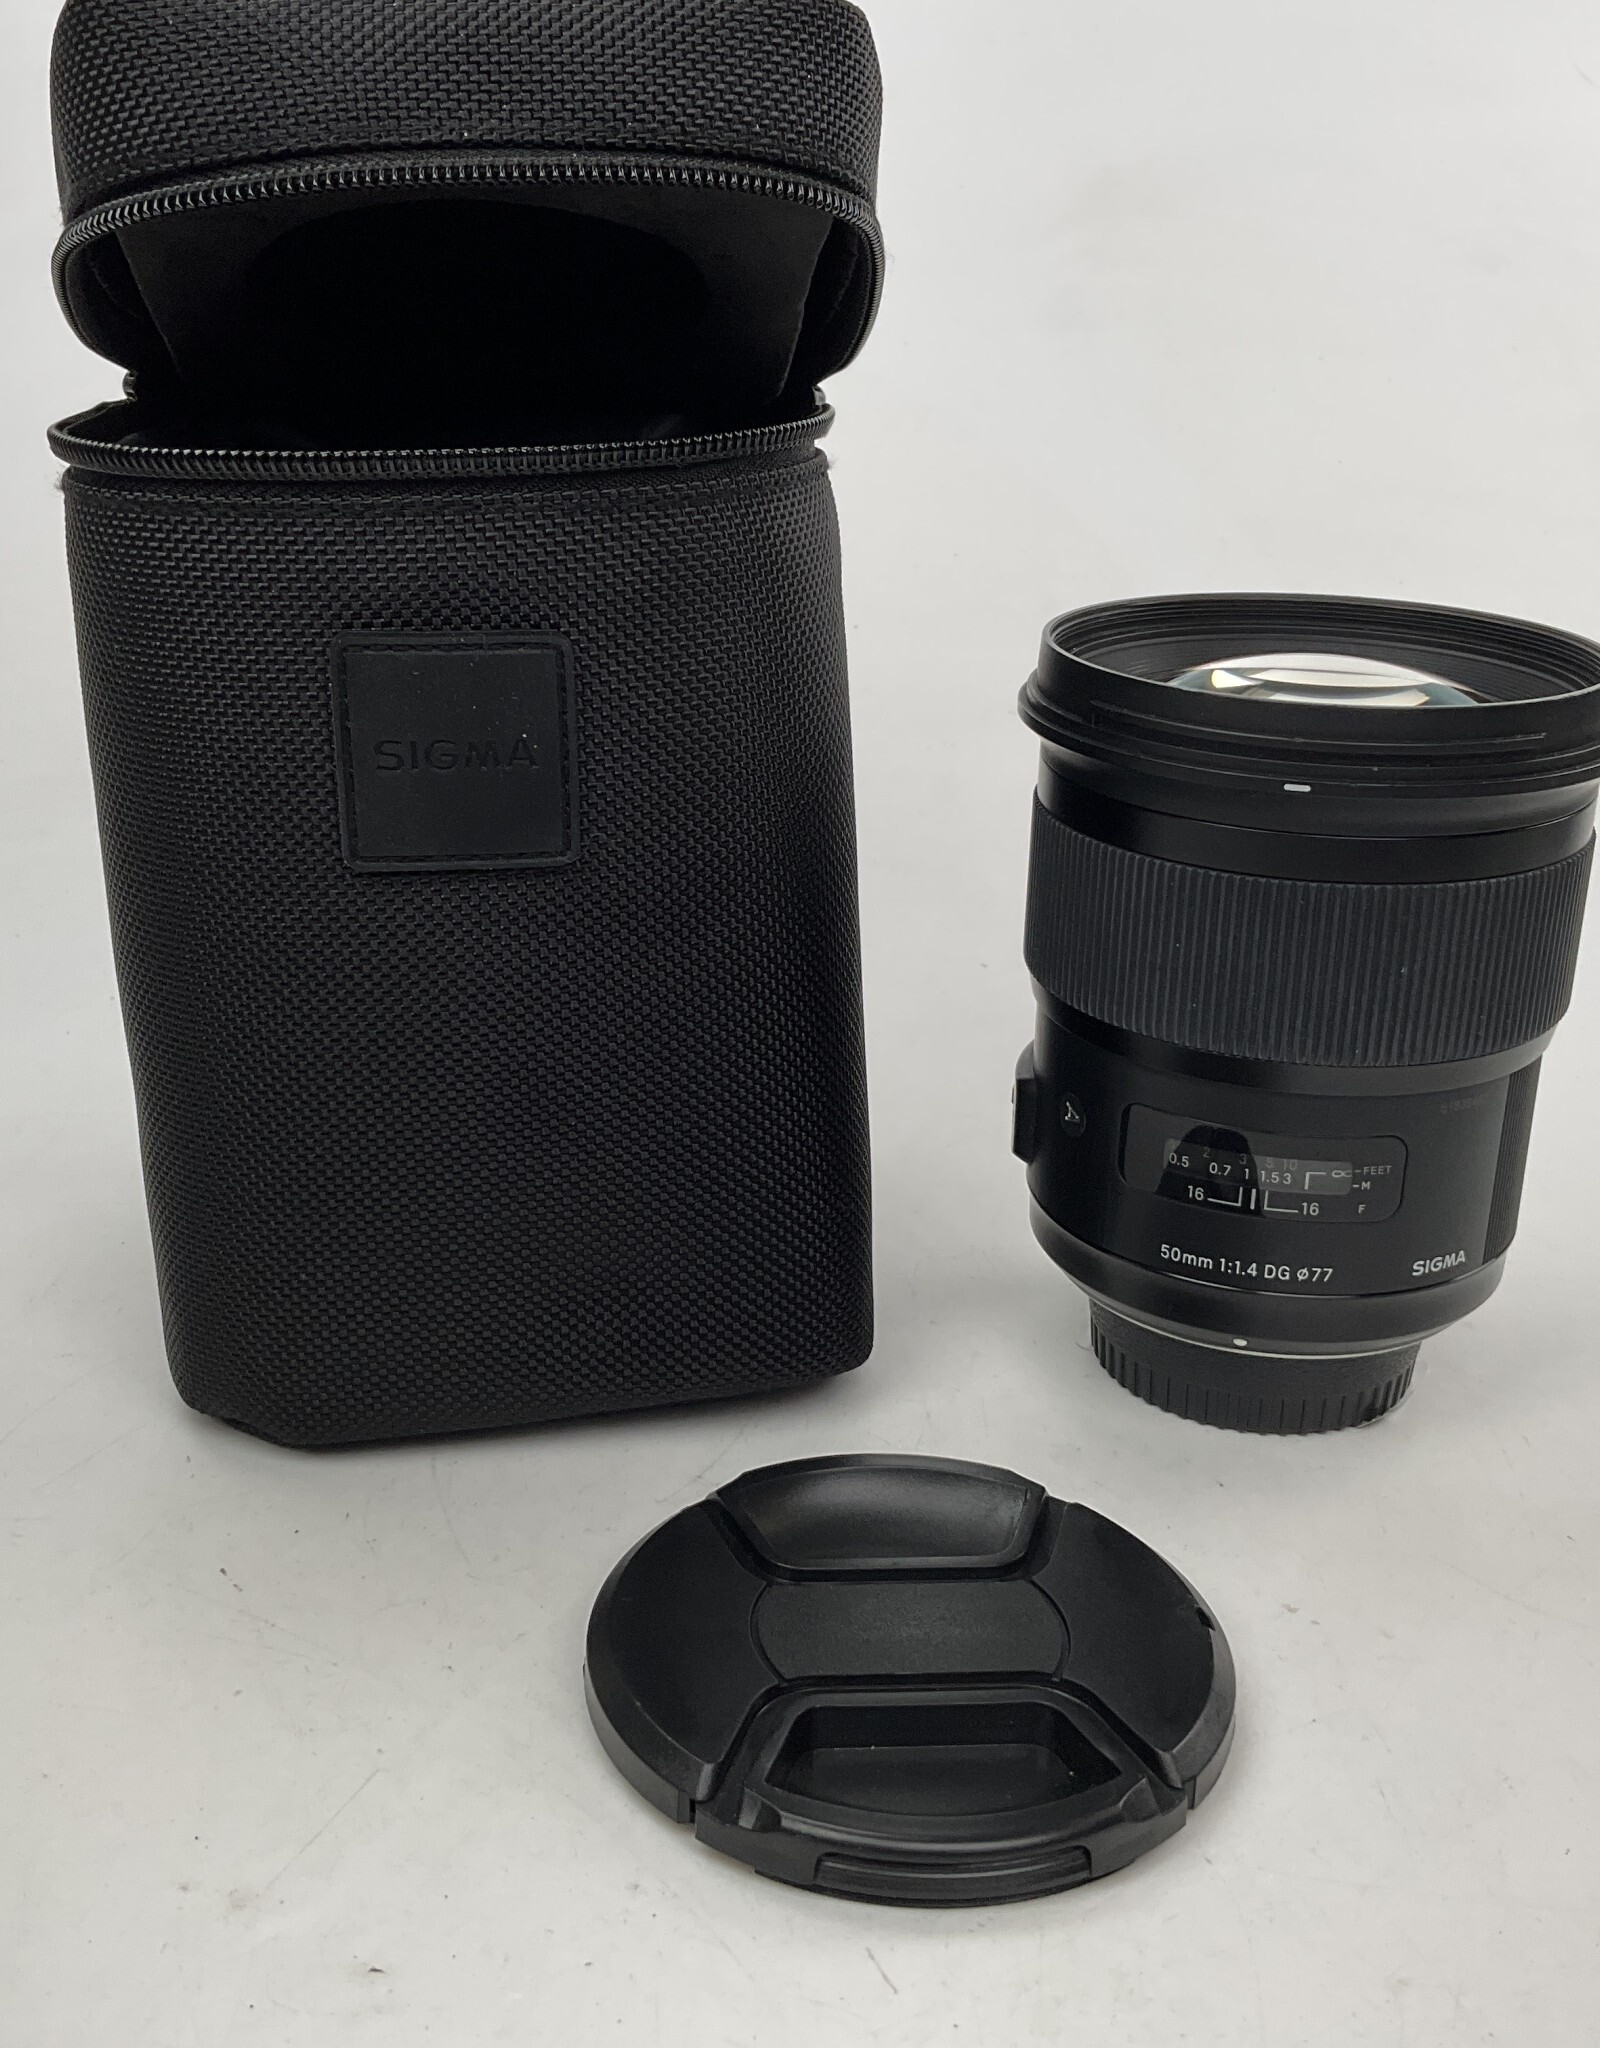 SIGMA Sigma 50mm f1.4 DG Art Lens for Nikon Used Good